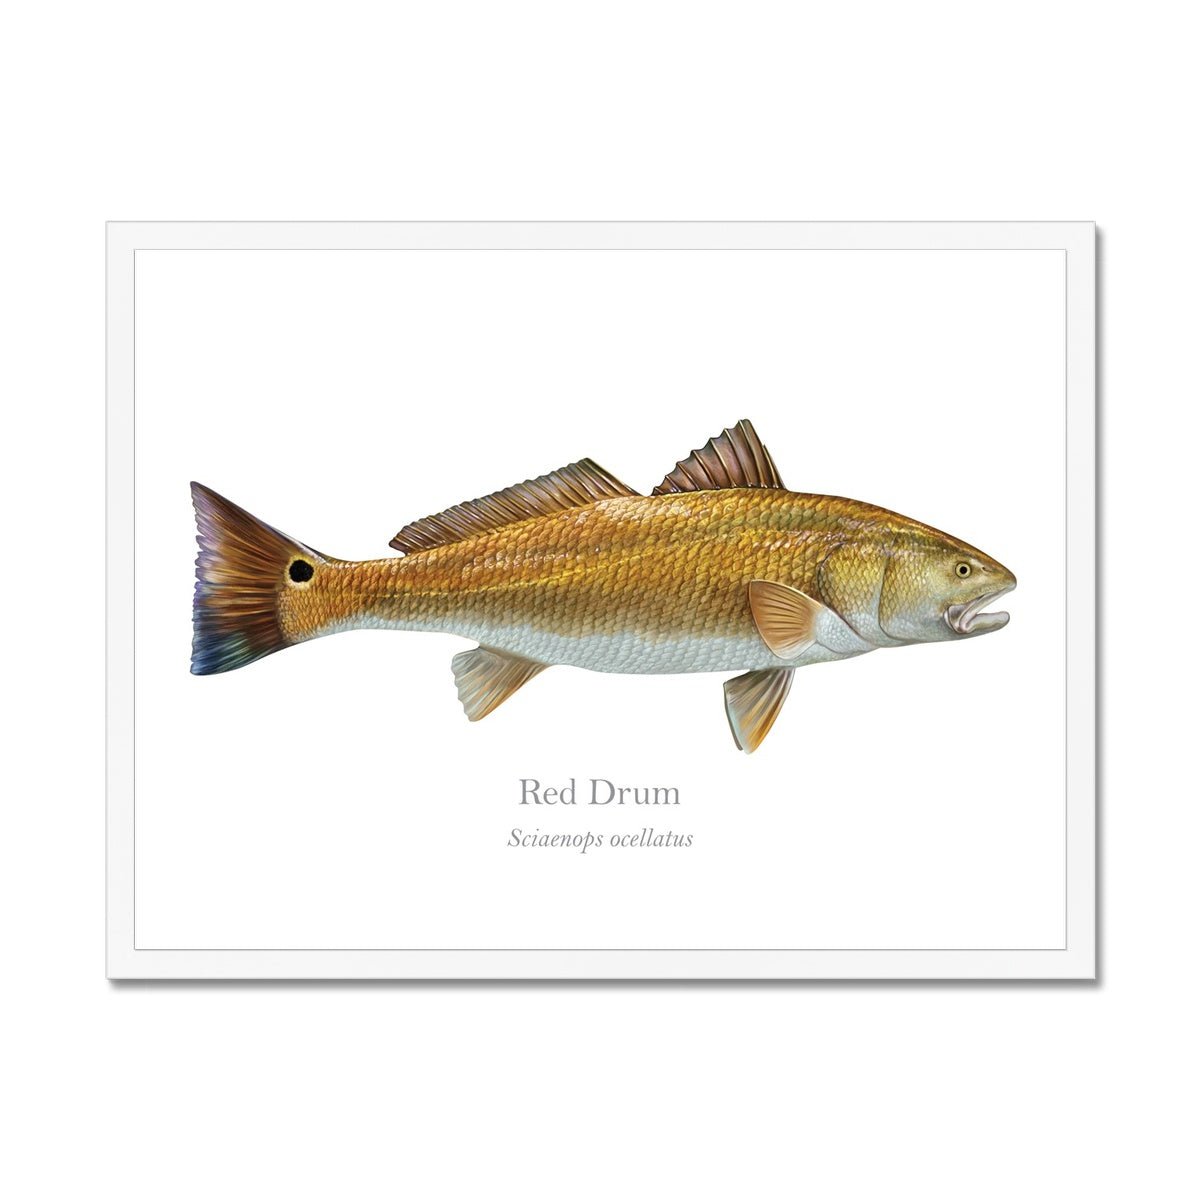 Red Drum, Red Drum Fish Texas